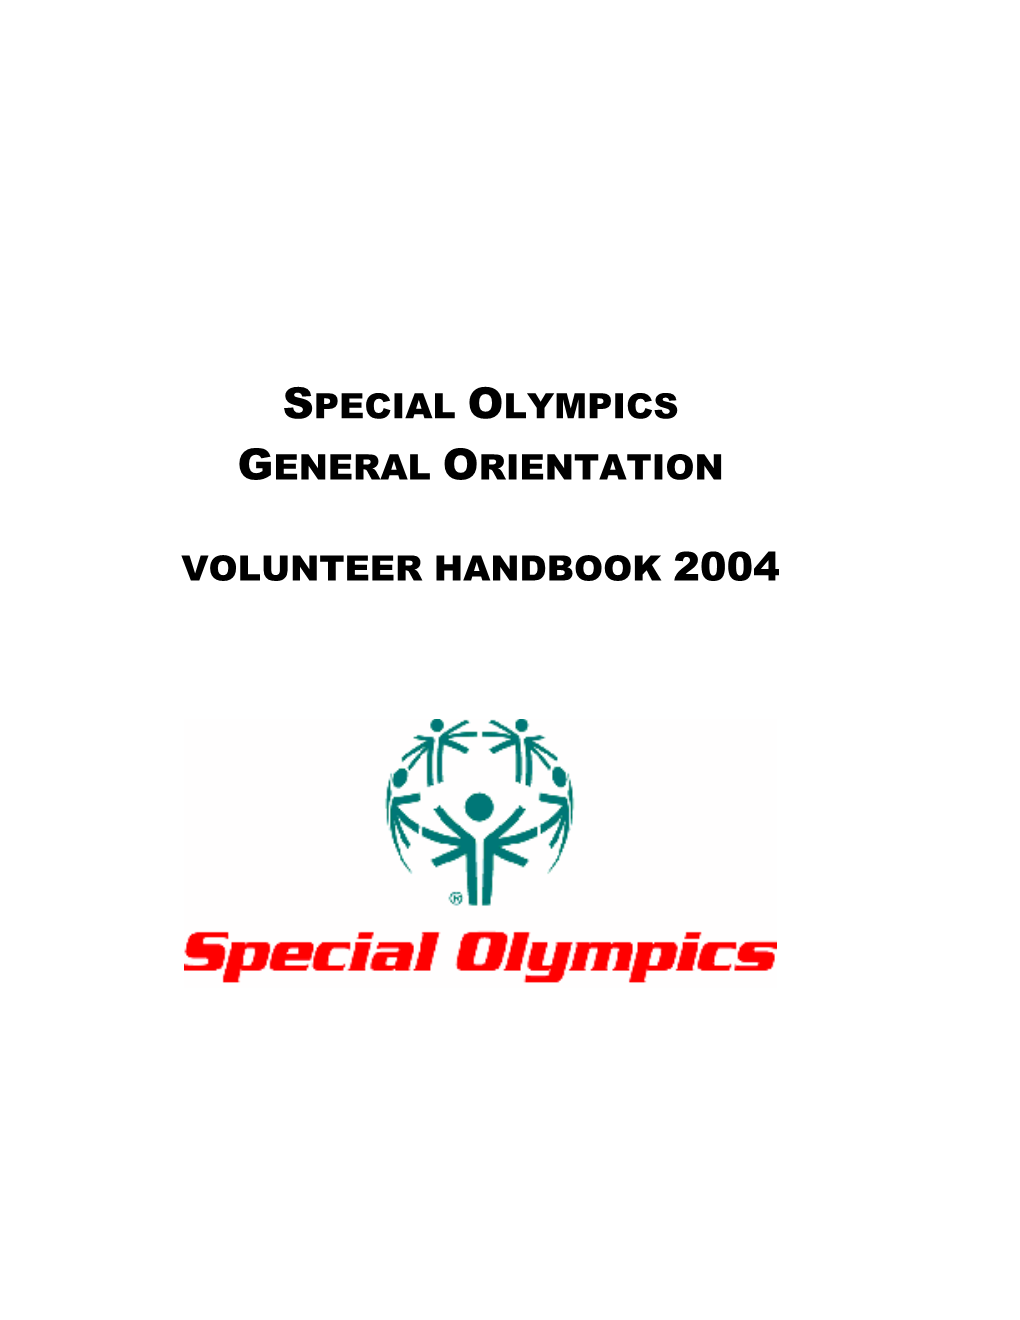 Special Olympics General Orientation Volunteer Handbook – May 2004